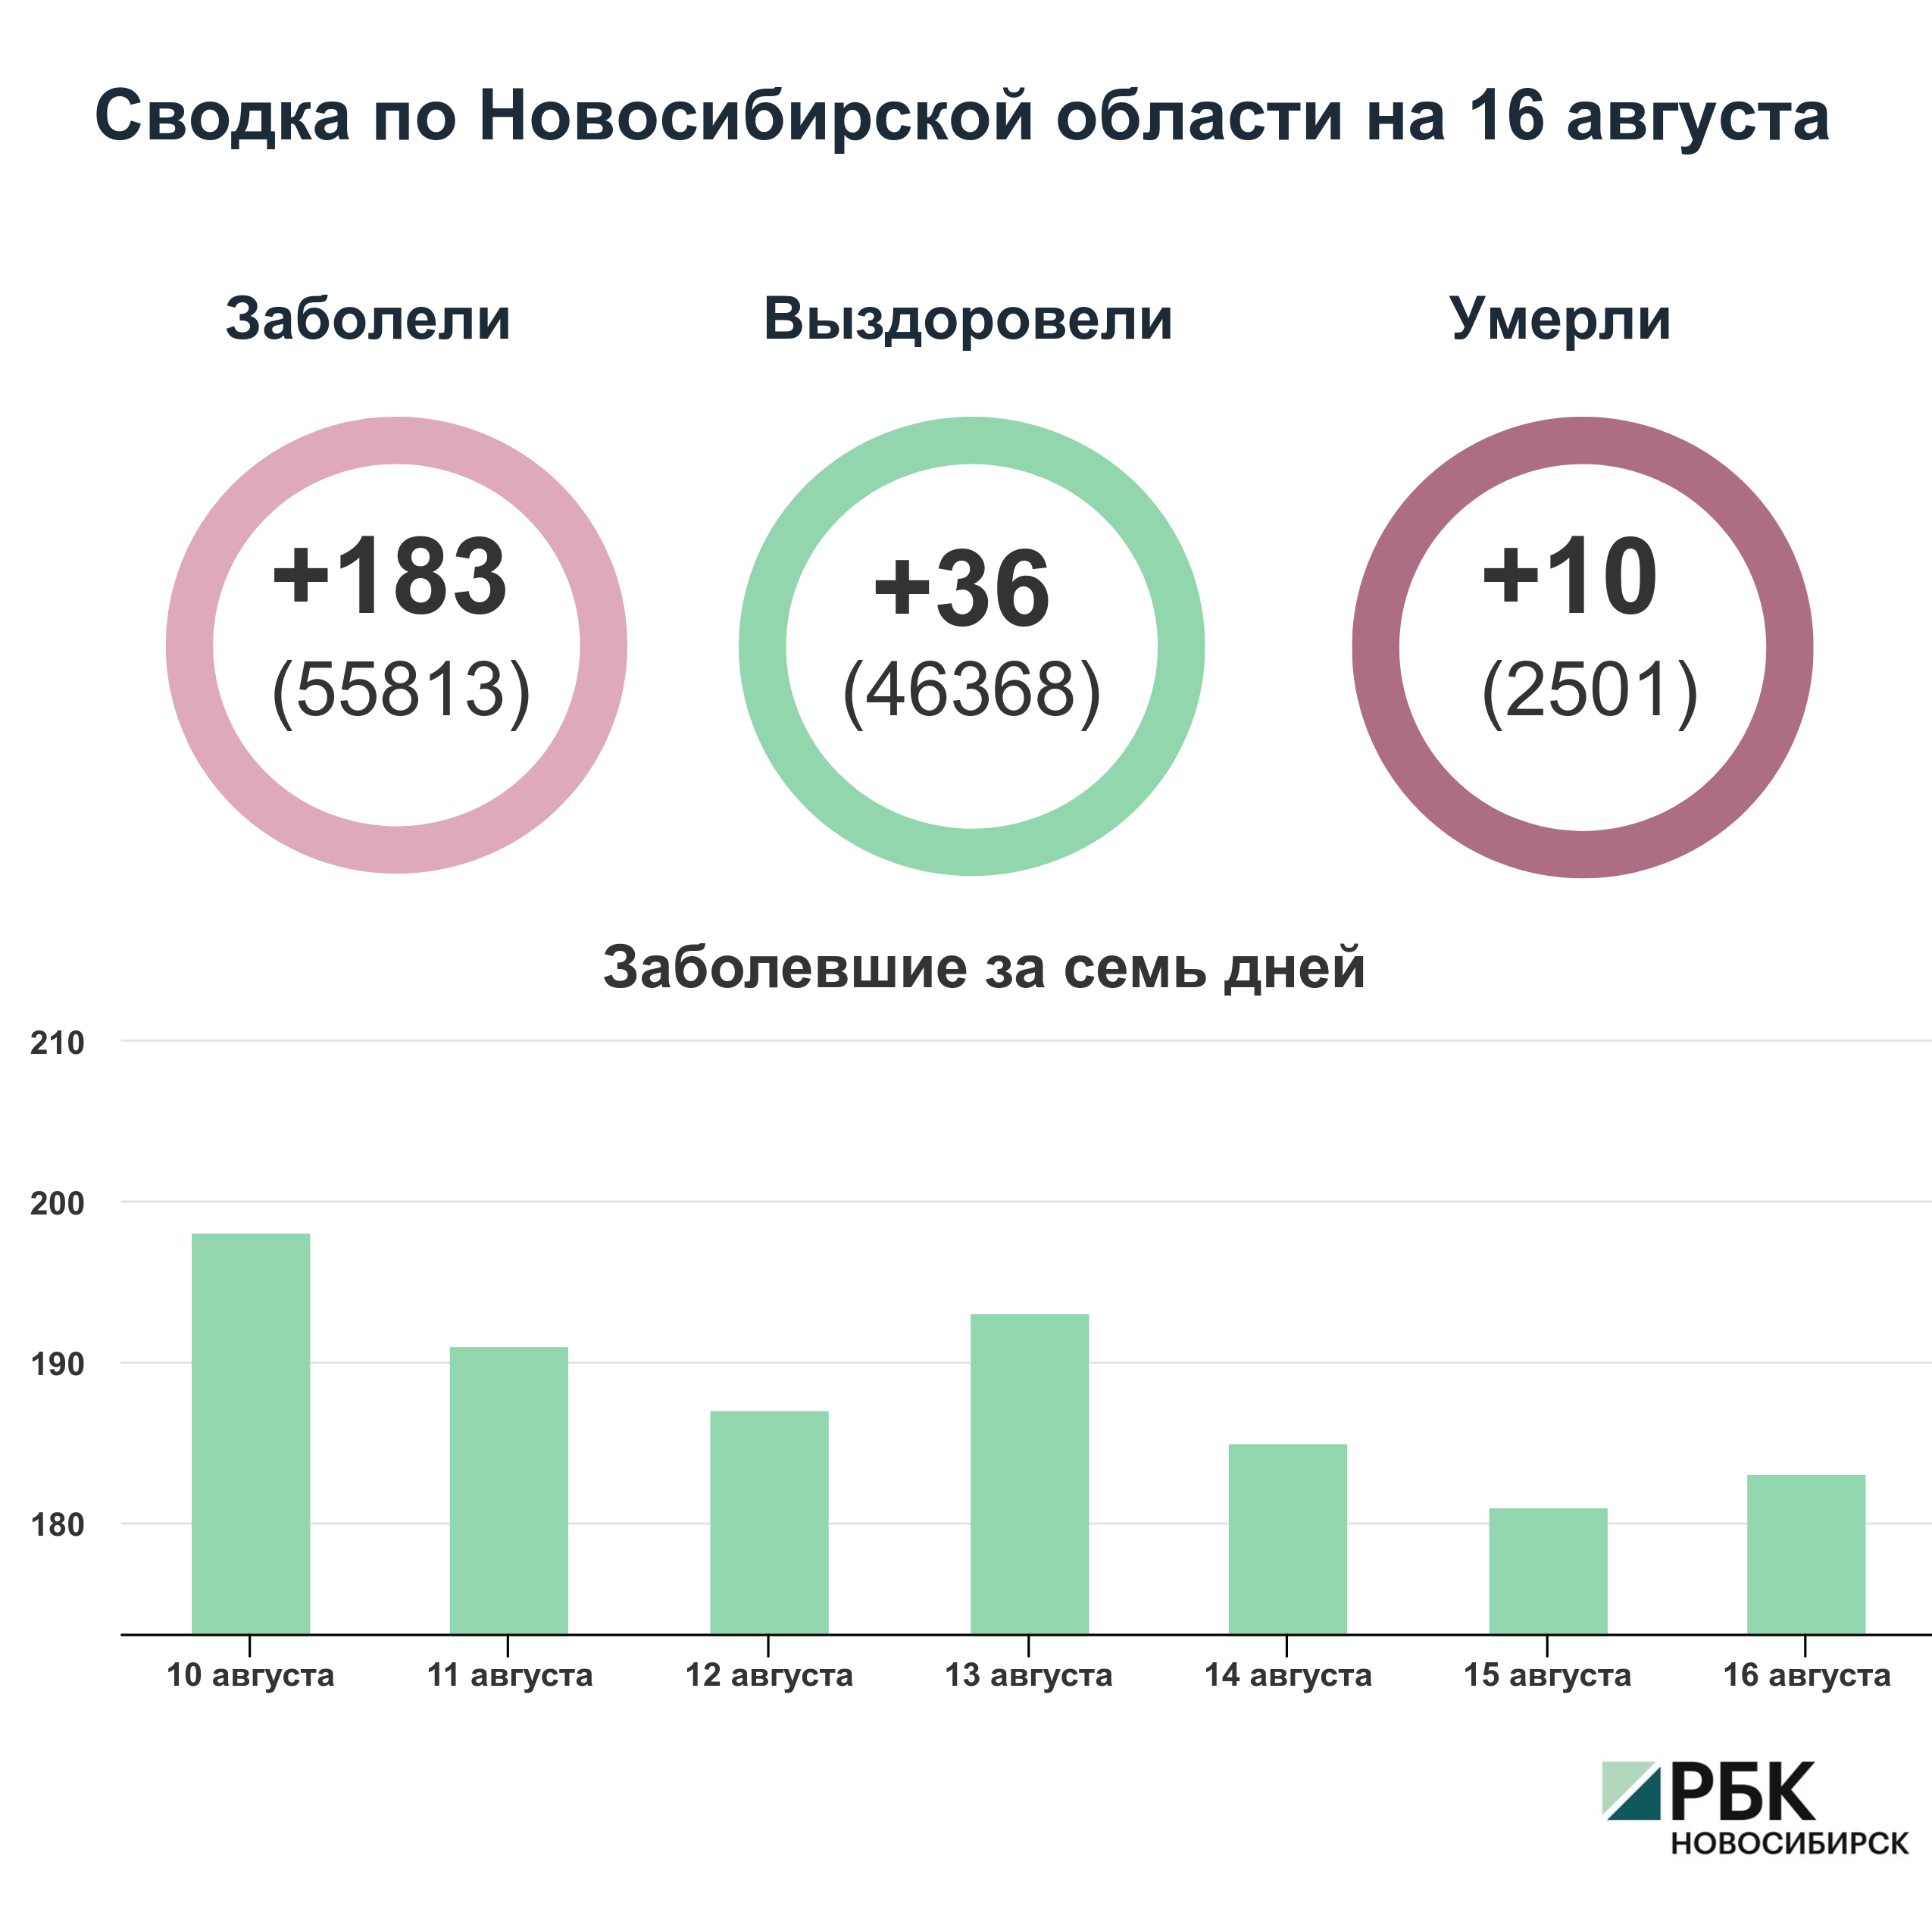 Коронавирус в Новосибирске: сводка на 16 августа